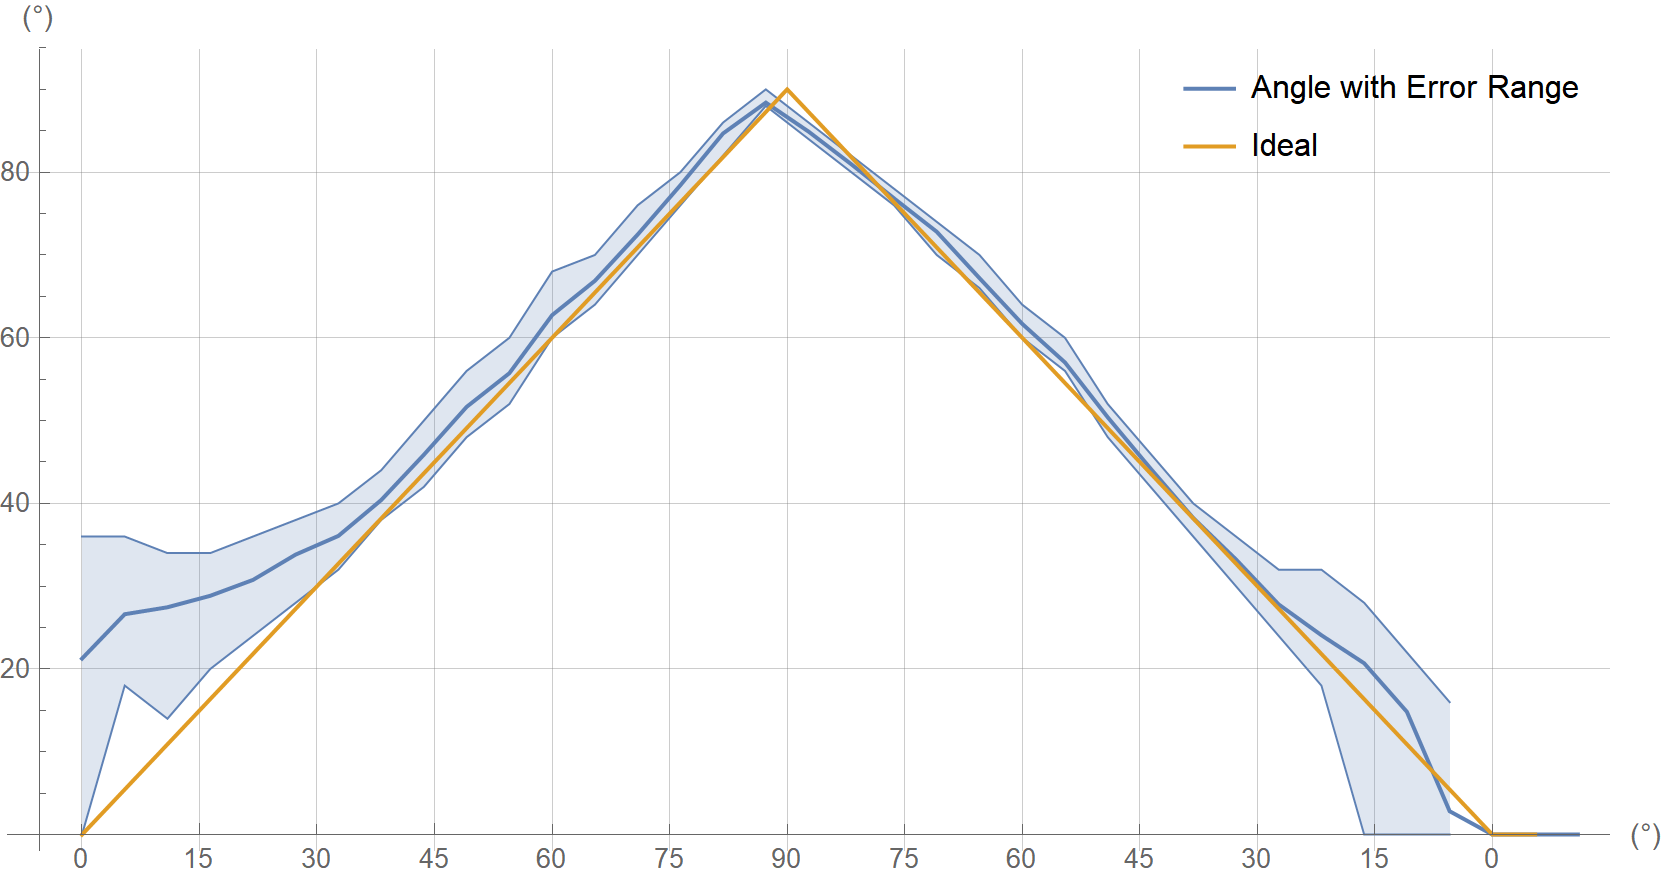 Elevation Error vs. Elevation Ideal Angle (Environment 2, 45 Degree Polarization)